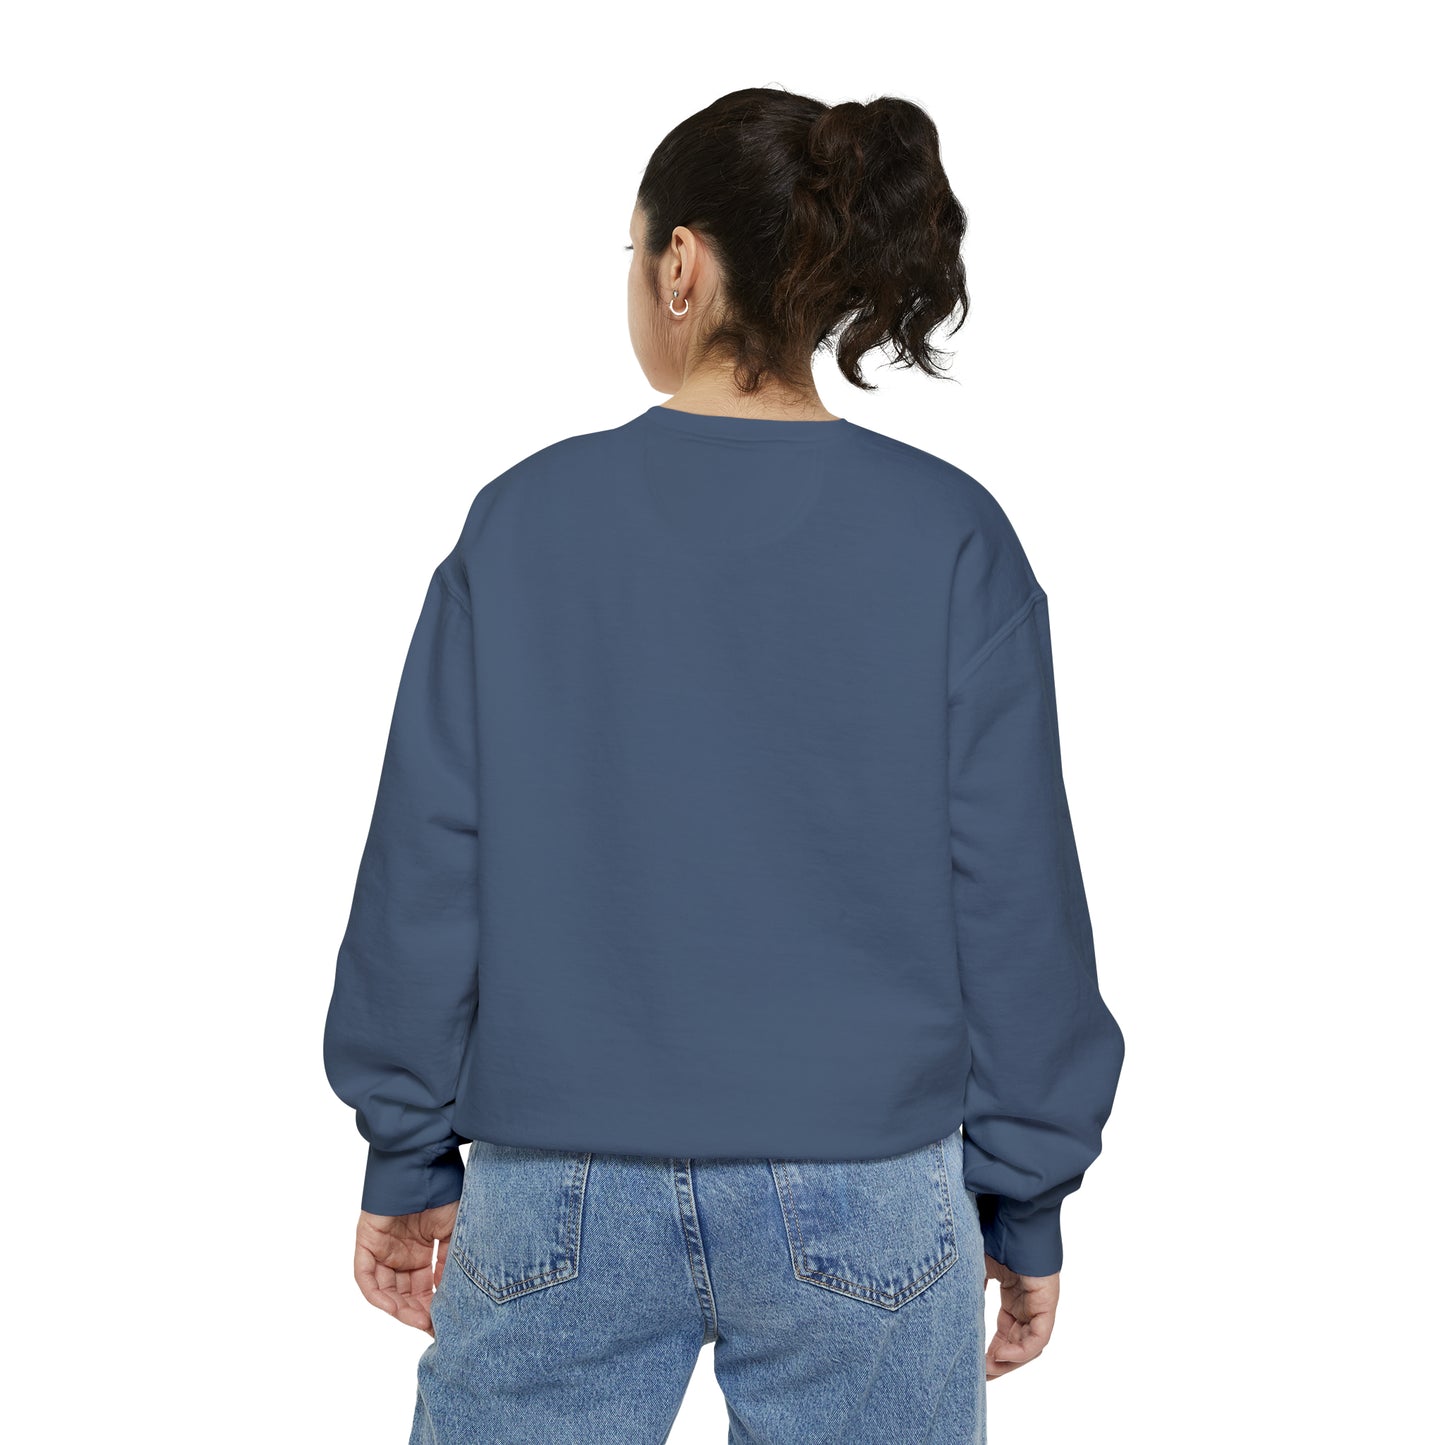 BIKE Unisex Garment-Dyed Sweatshirt